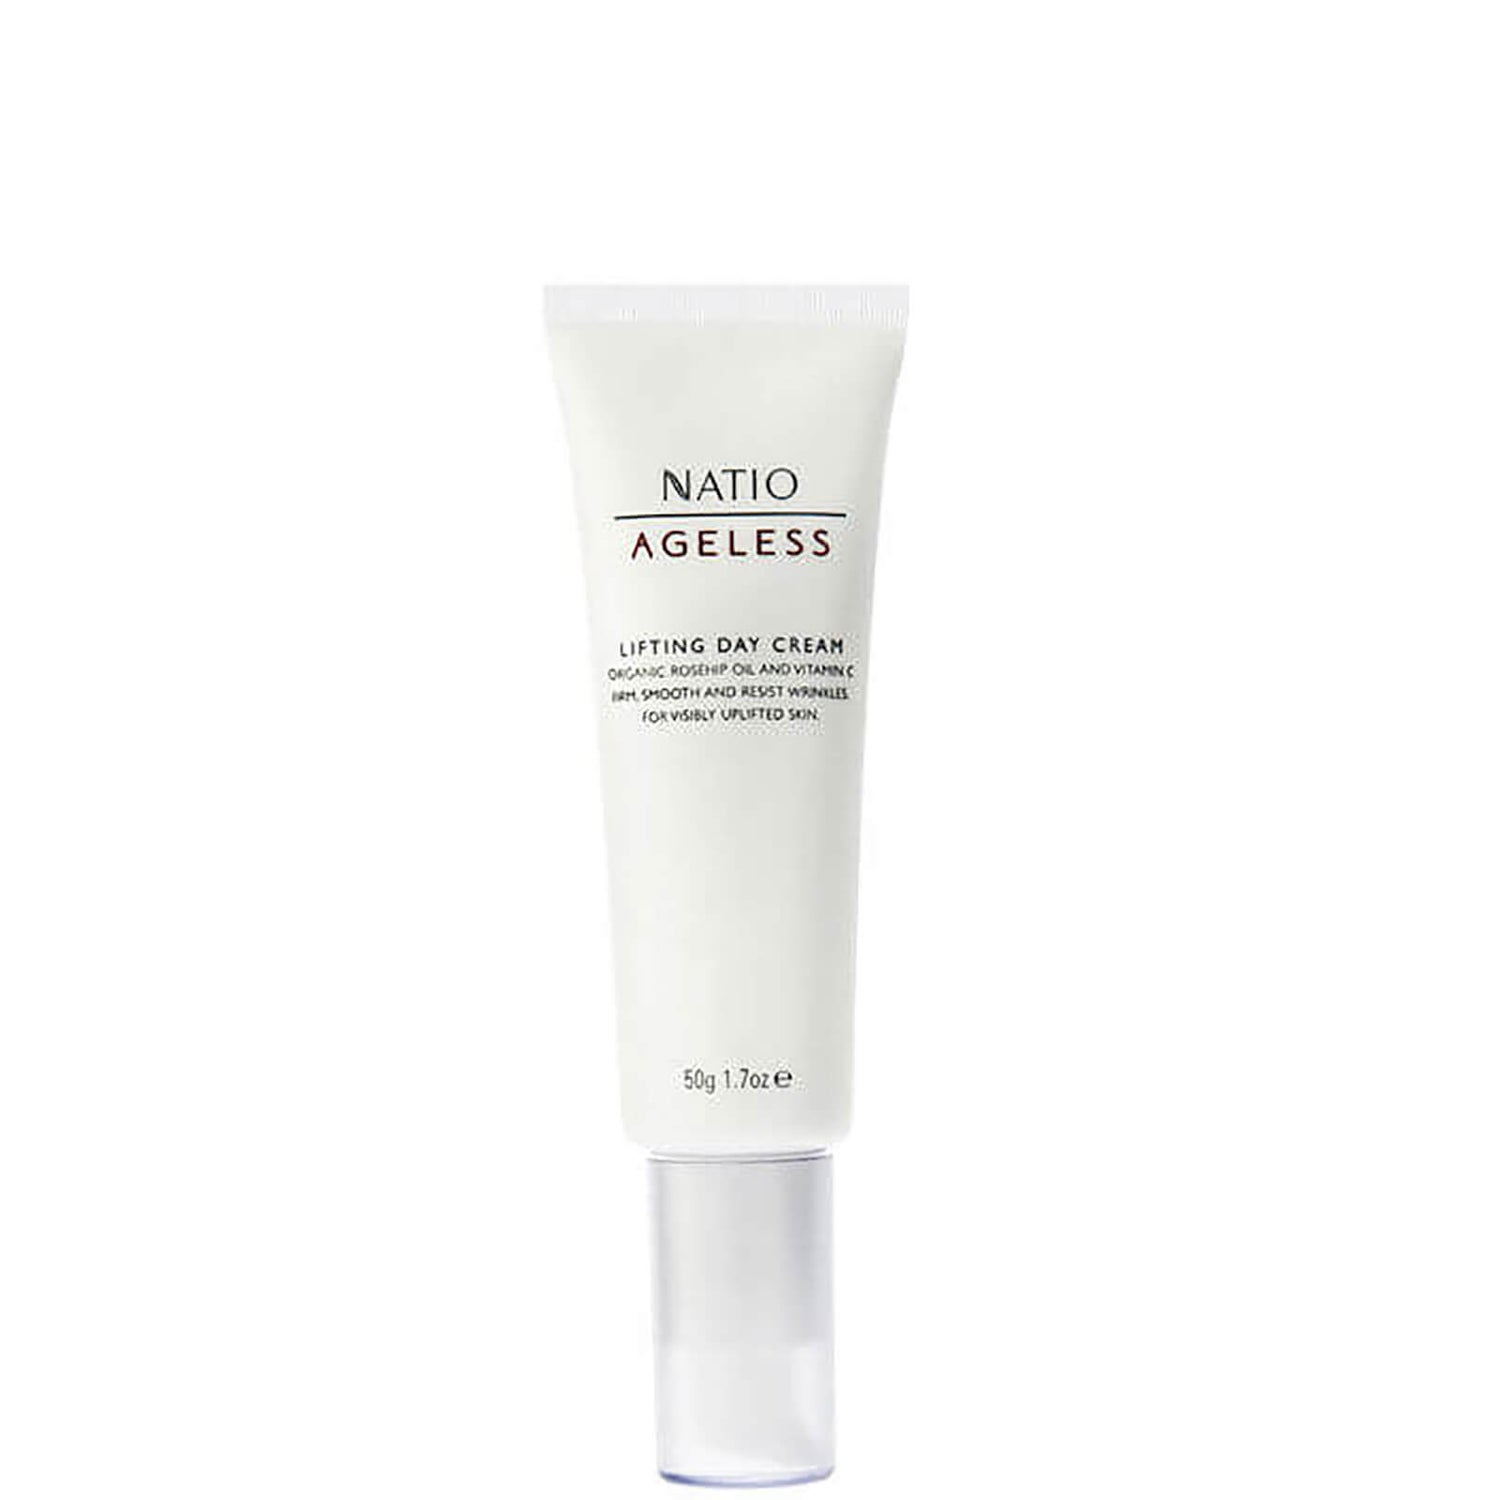 Natio Ageless Lifting Day Cream (50g)